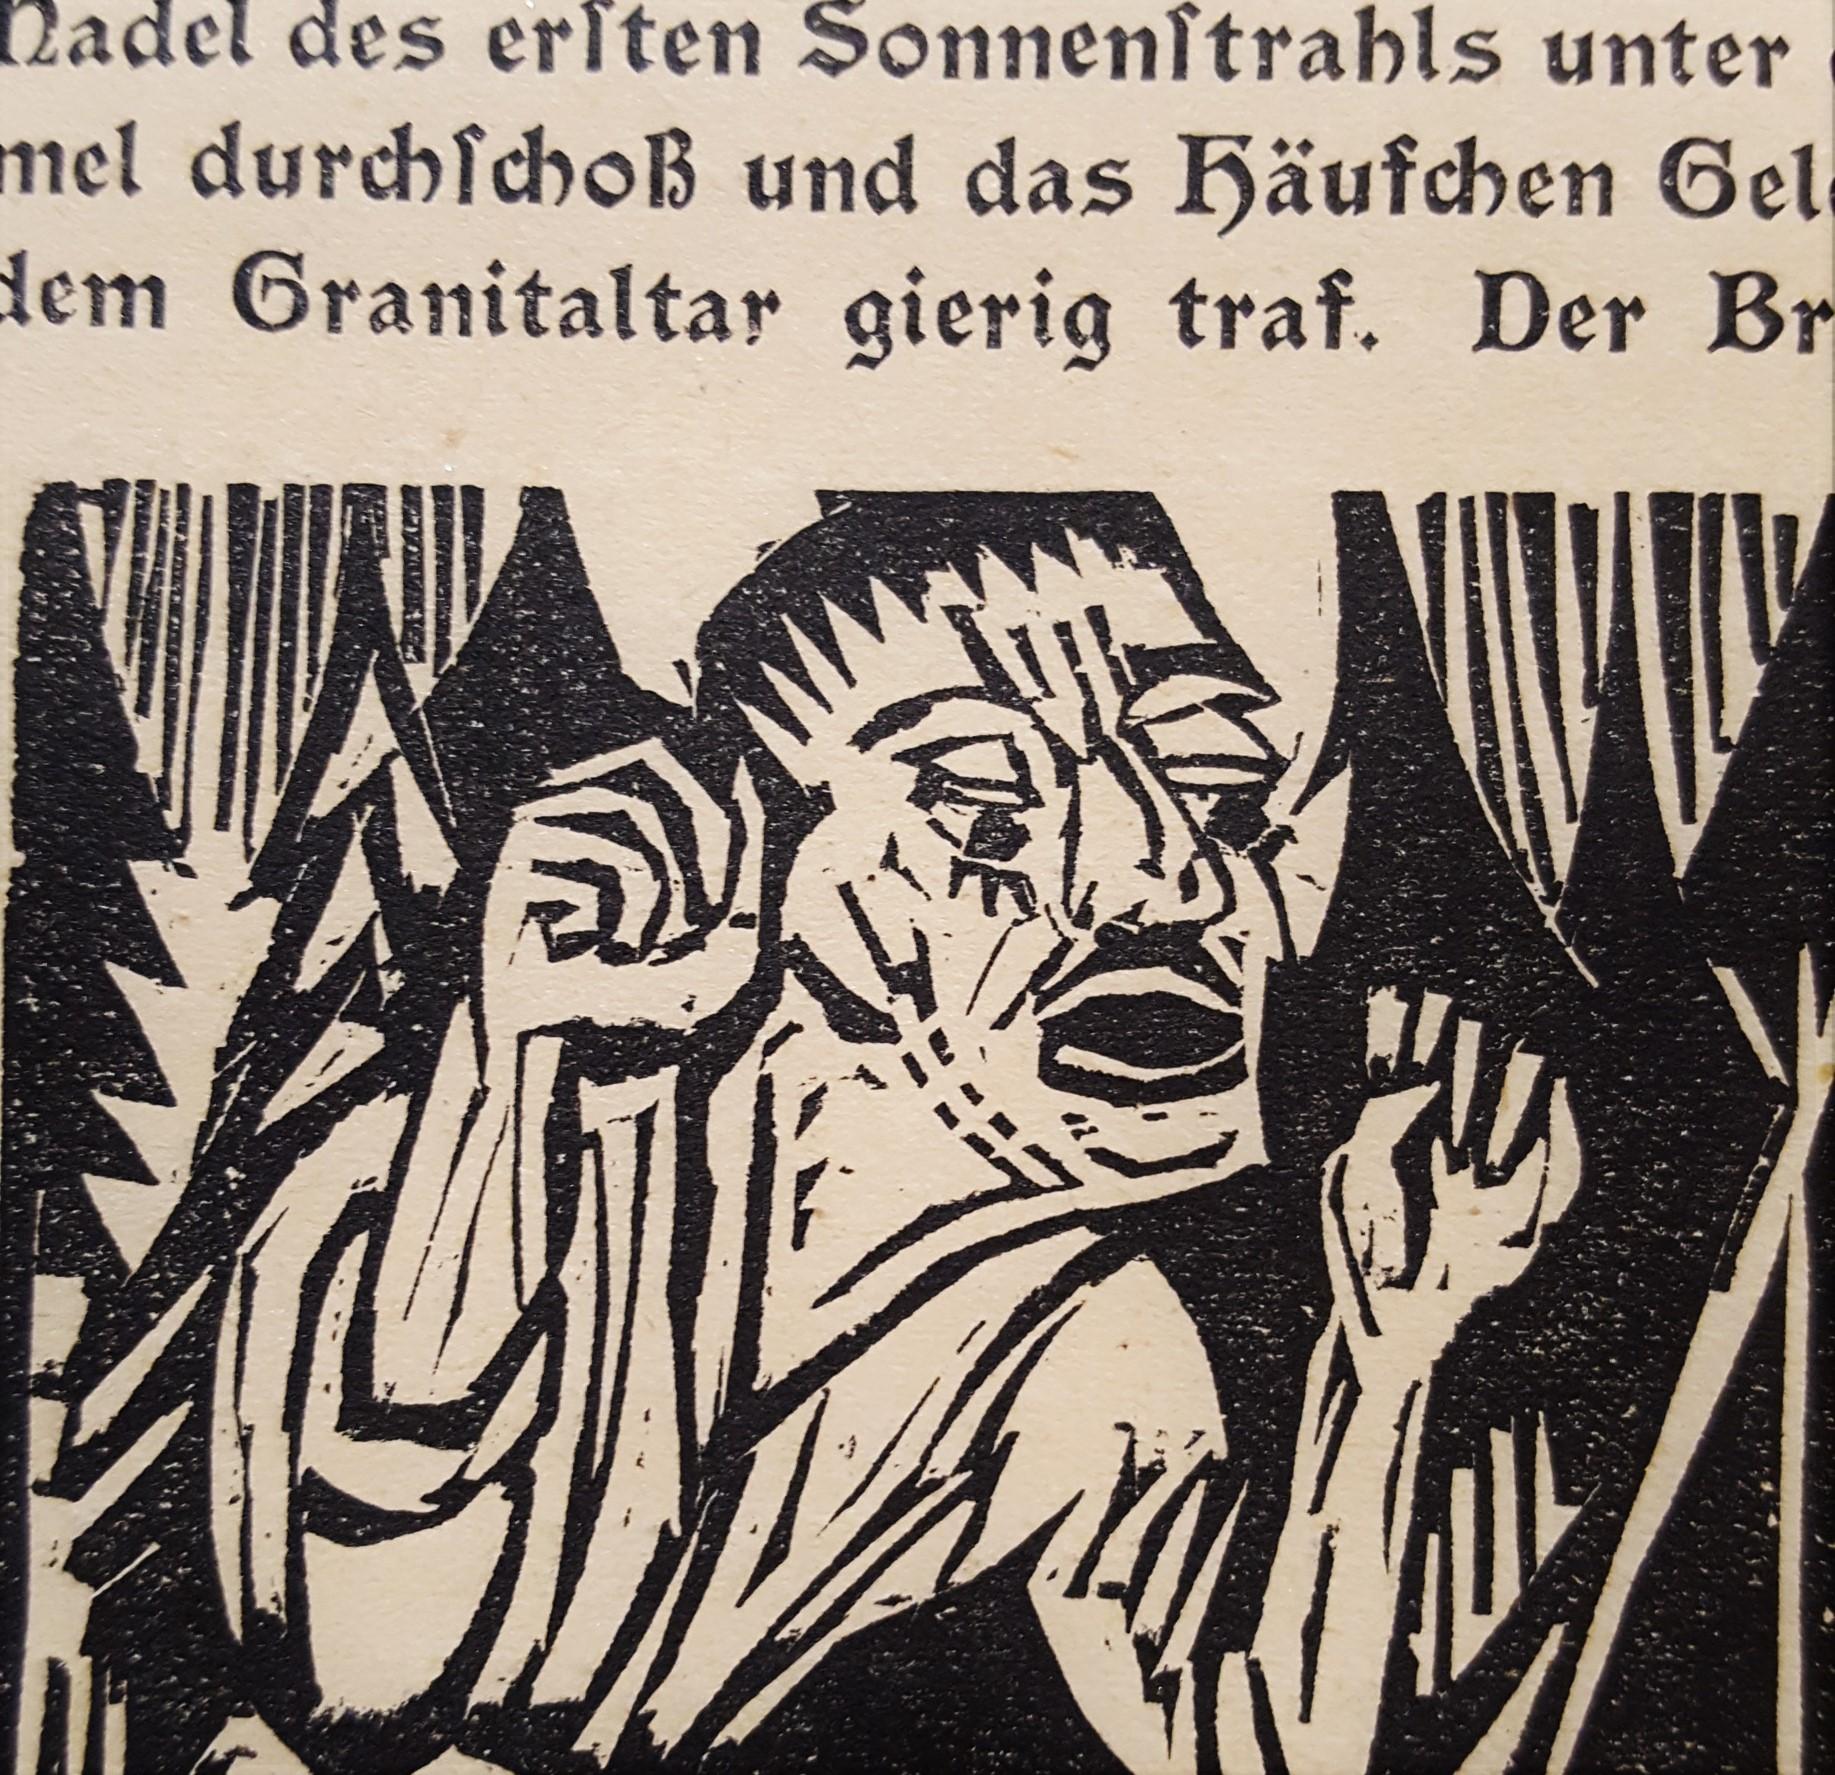 Der Briggel: Briggel verflucht das Geld (Briggel: Briggel Cursing Money) - Beige Figurative Print by Ernst Ludwig Kirchner